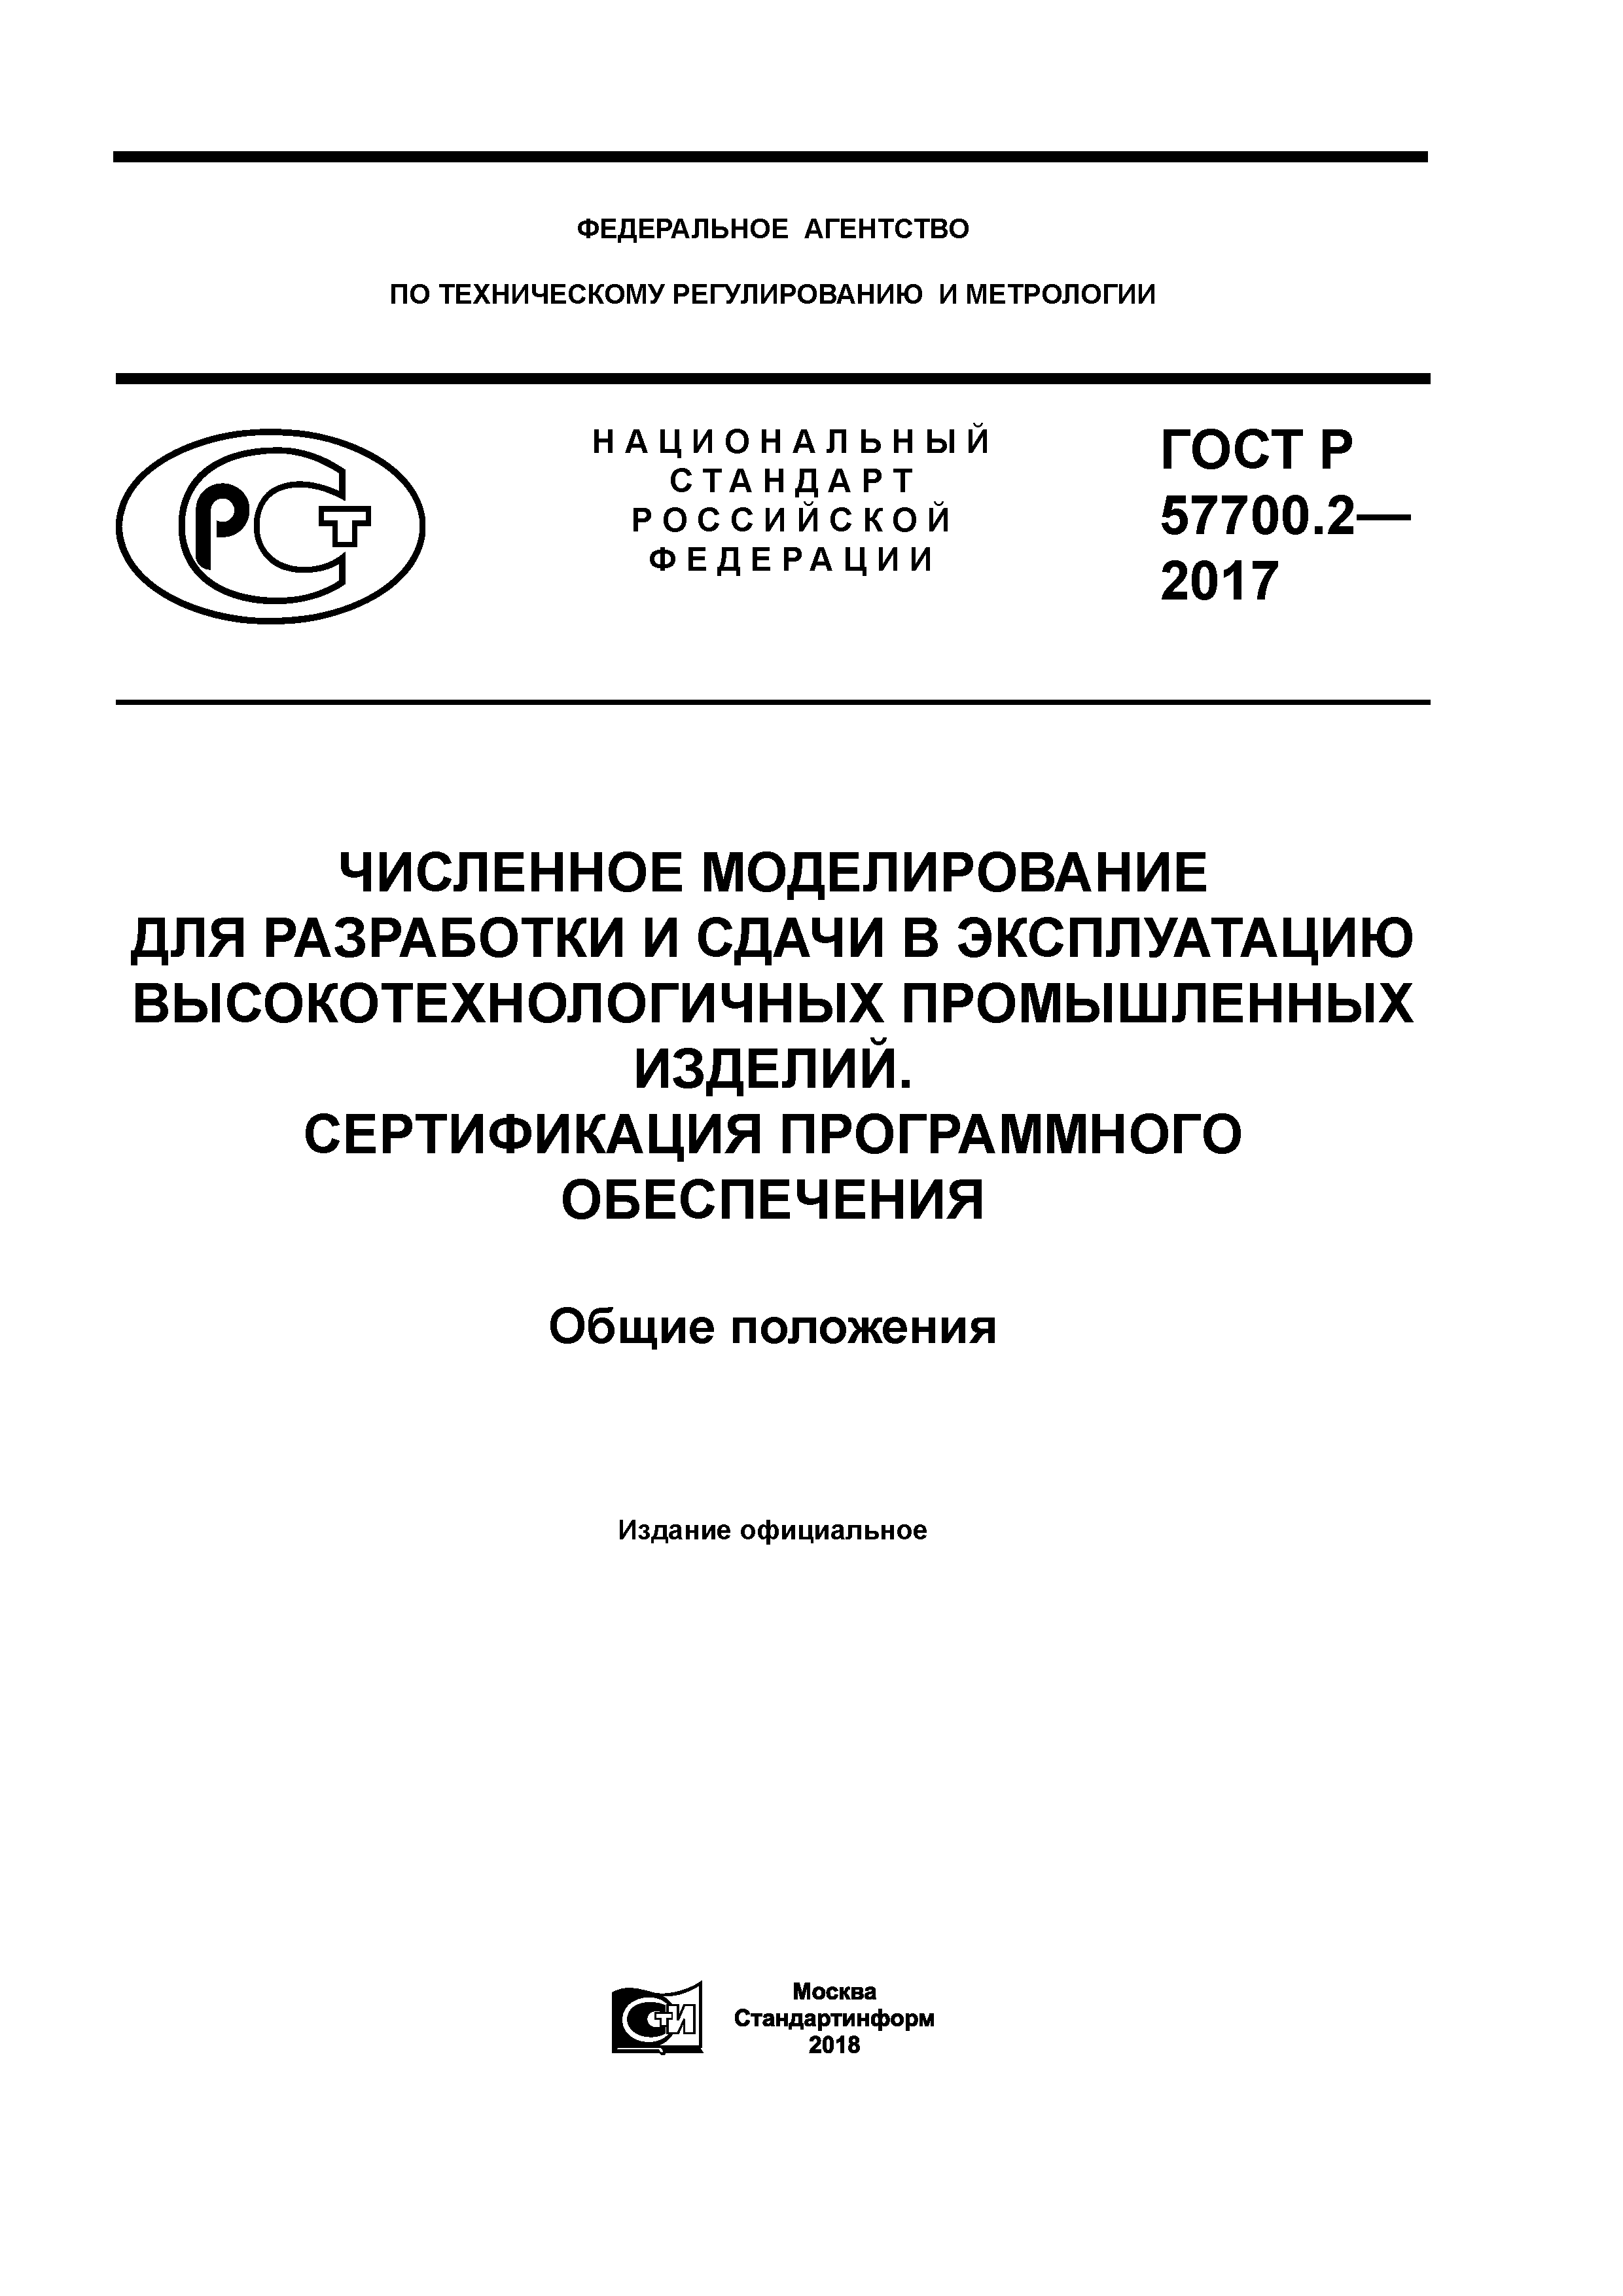 ГОСТ Р 57700.2-2017